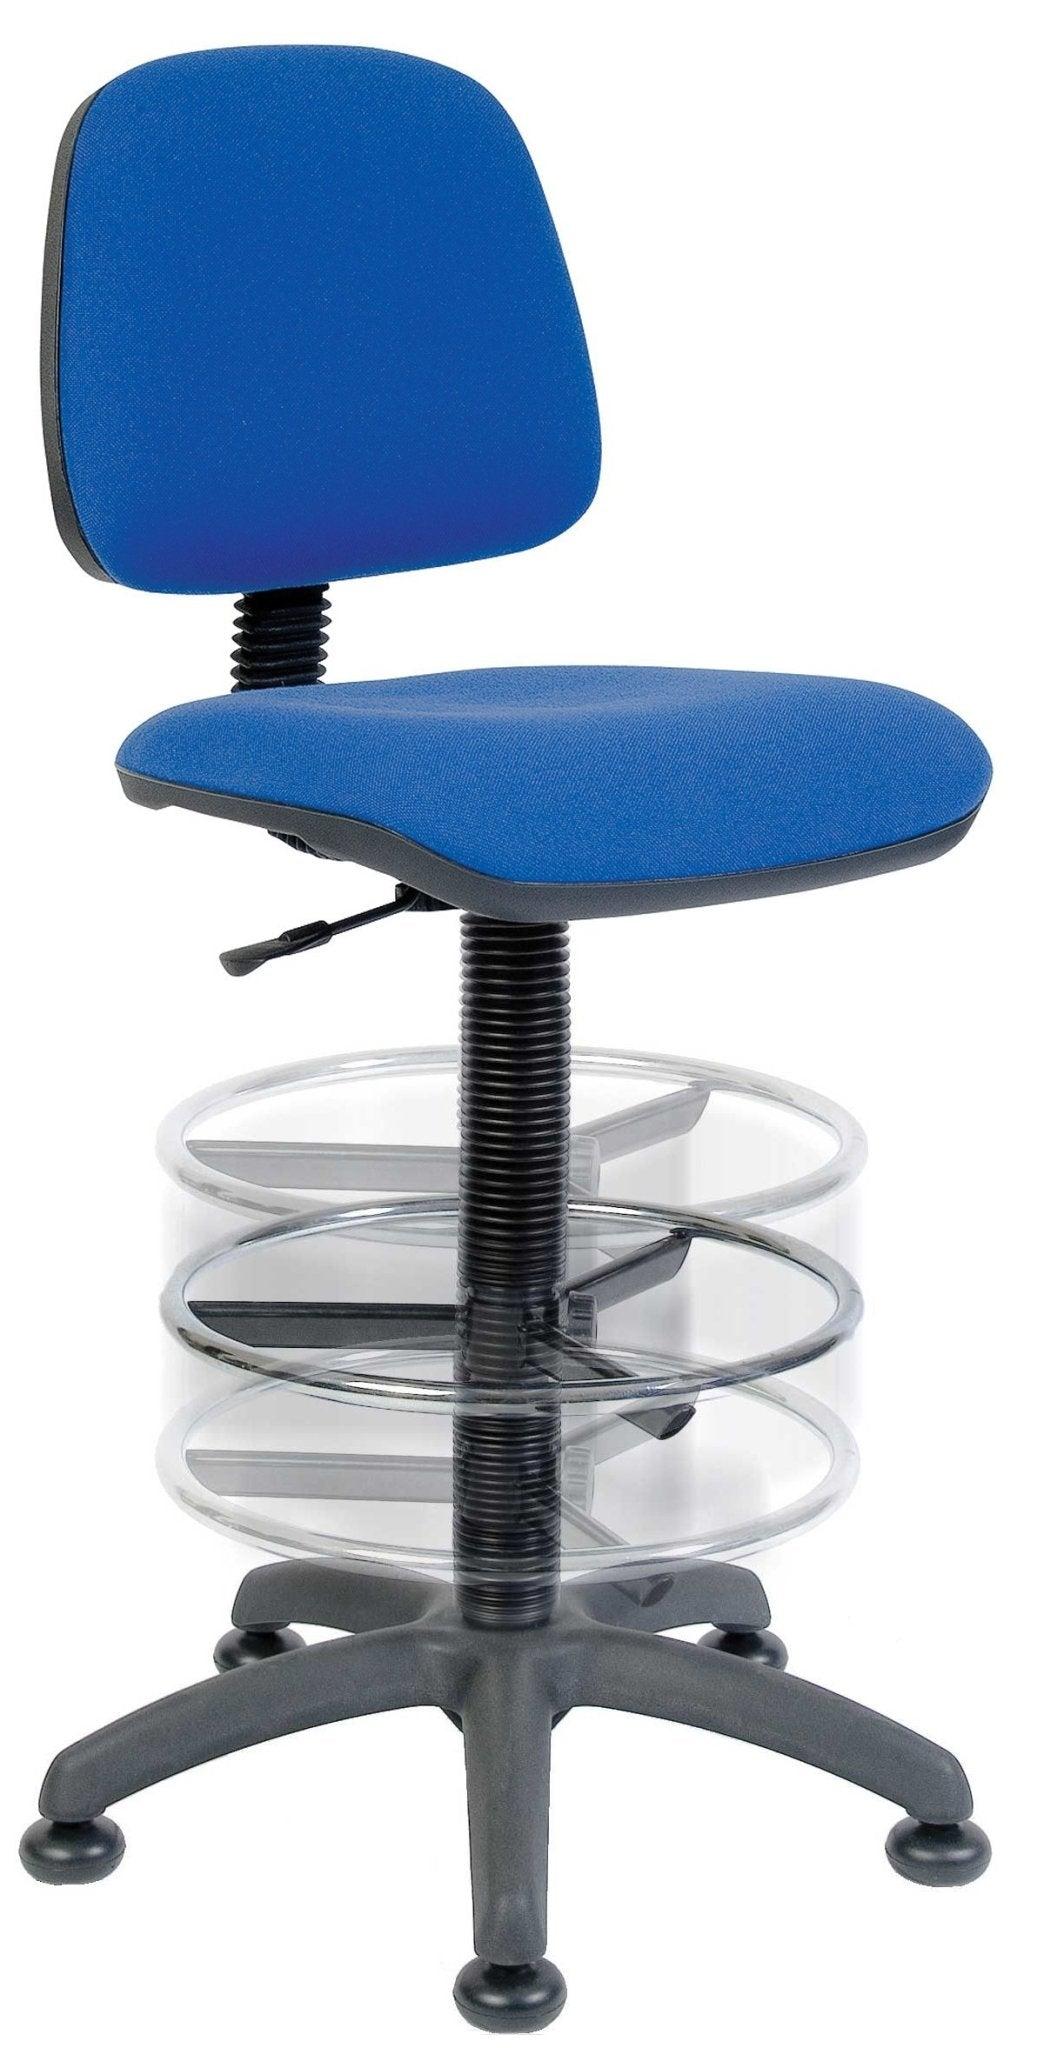 Deluxe draughter ergo blaster office chair (blue) - crimblefest furniture - image 1